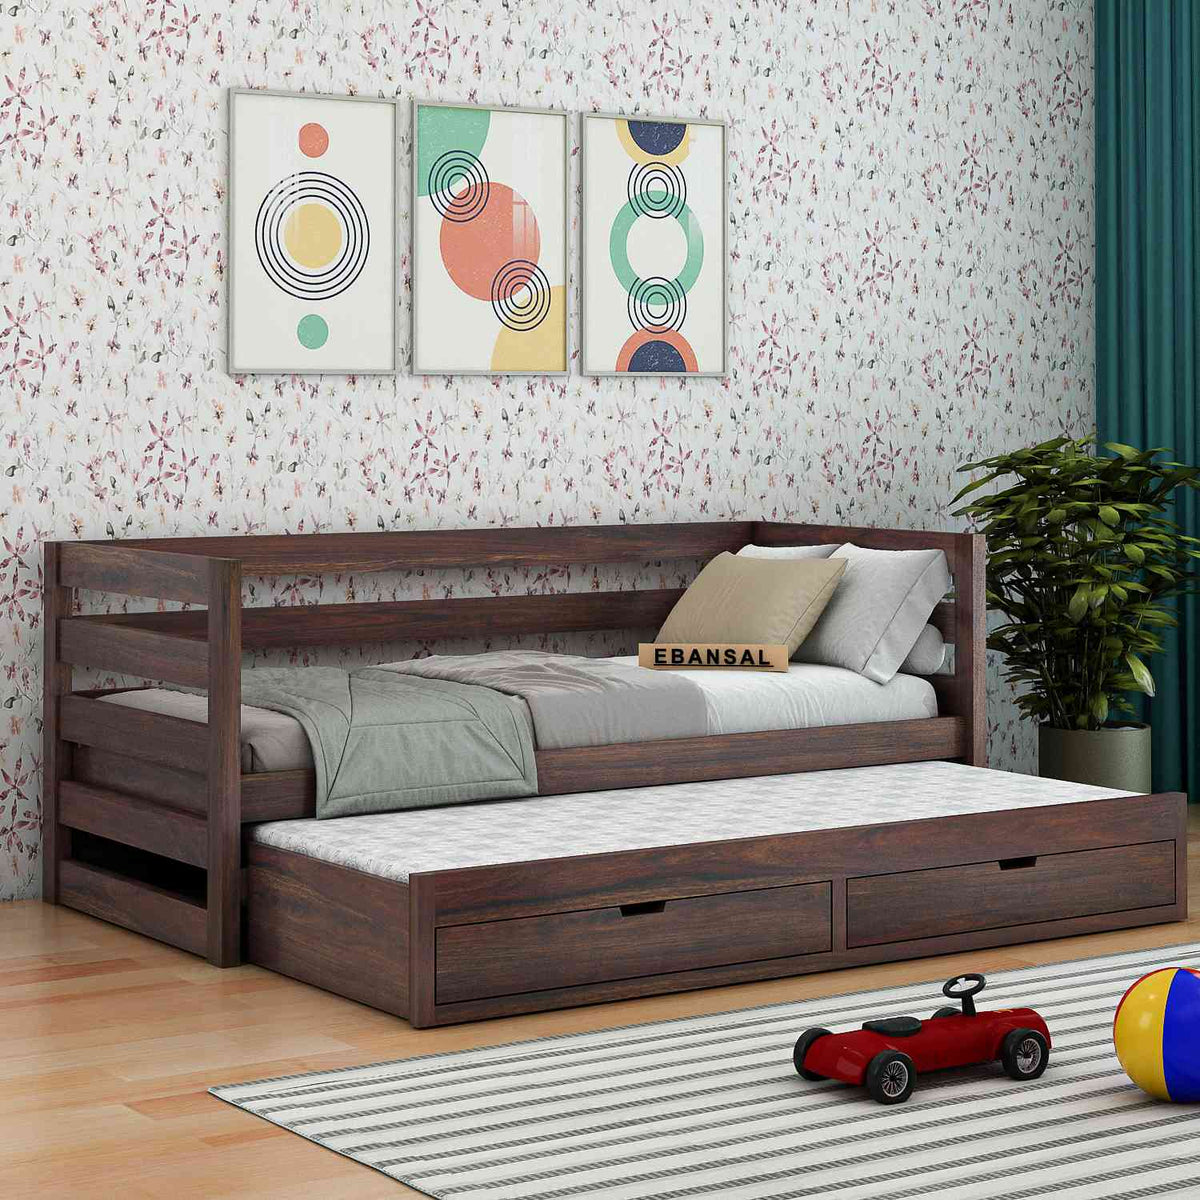 Feelinn Solid Sheesham Wood Trundle Bed For Kids (With Mattress, Walnut Finish)